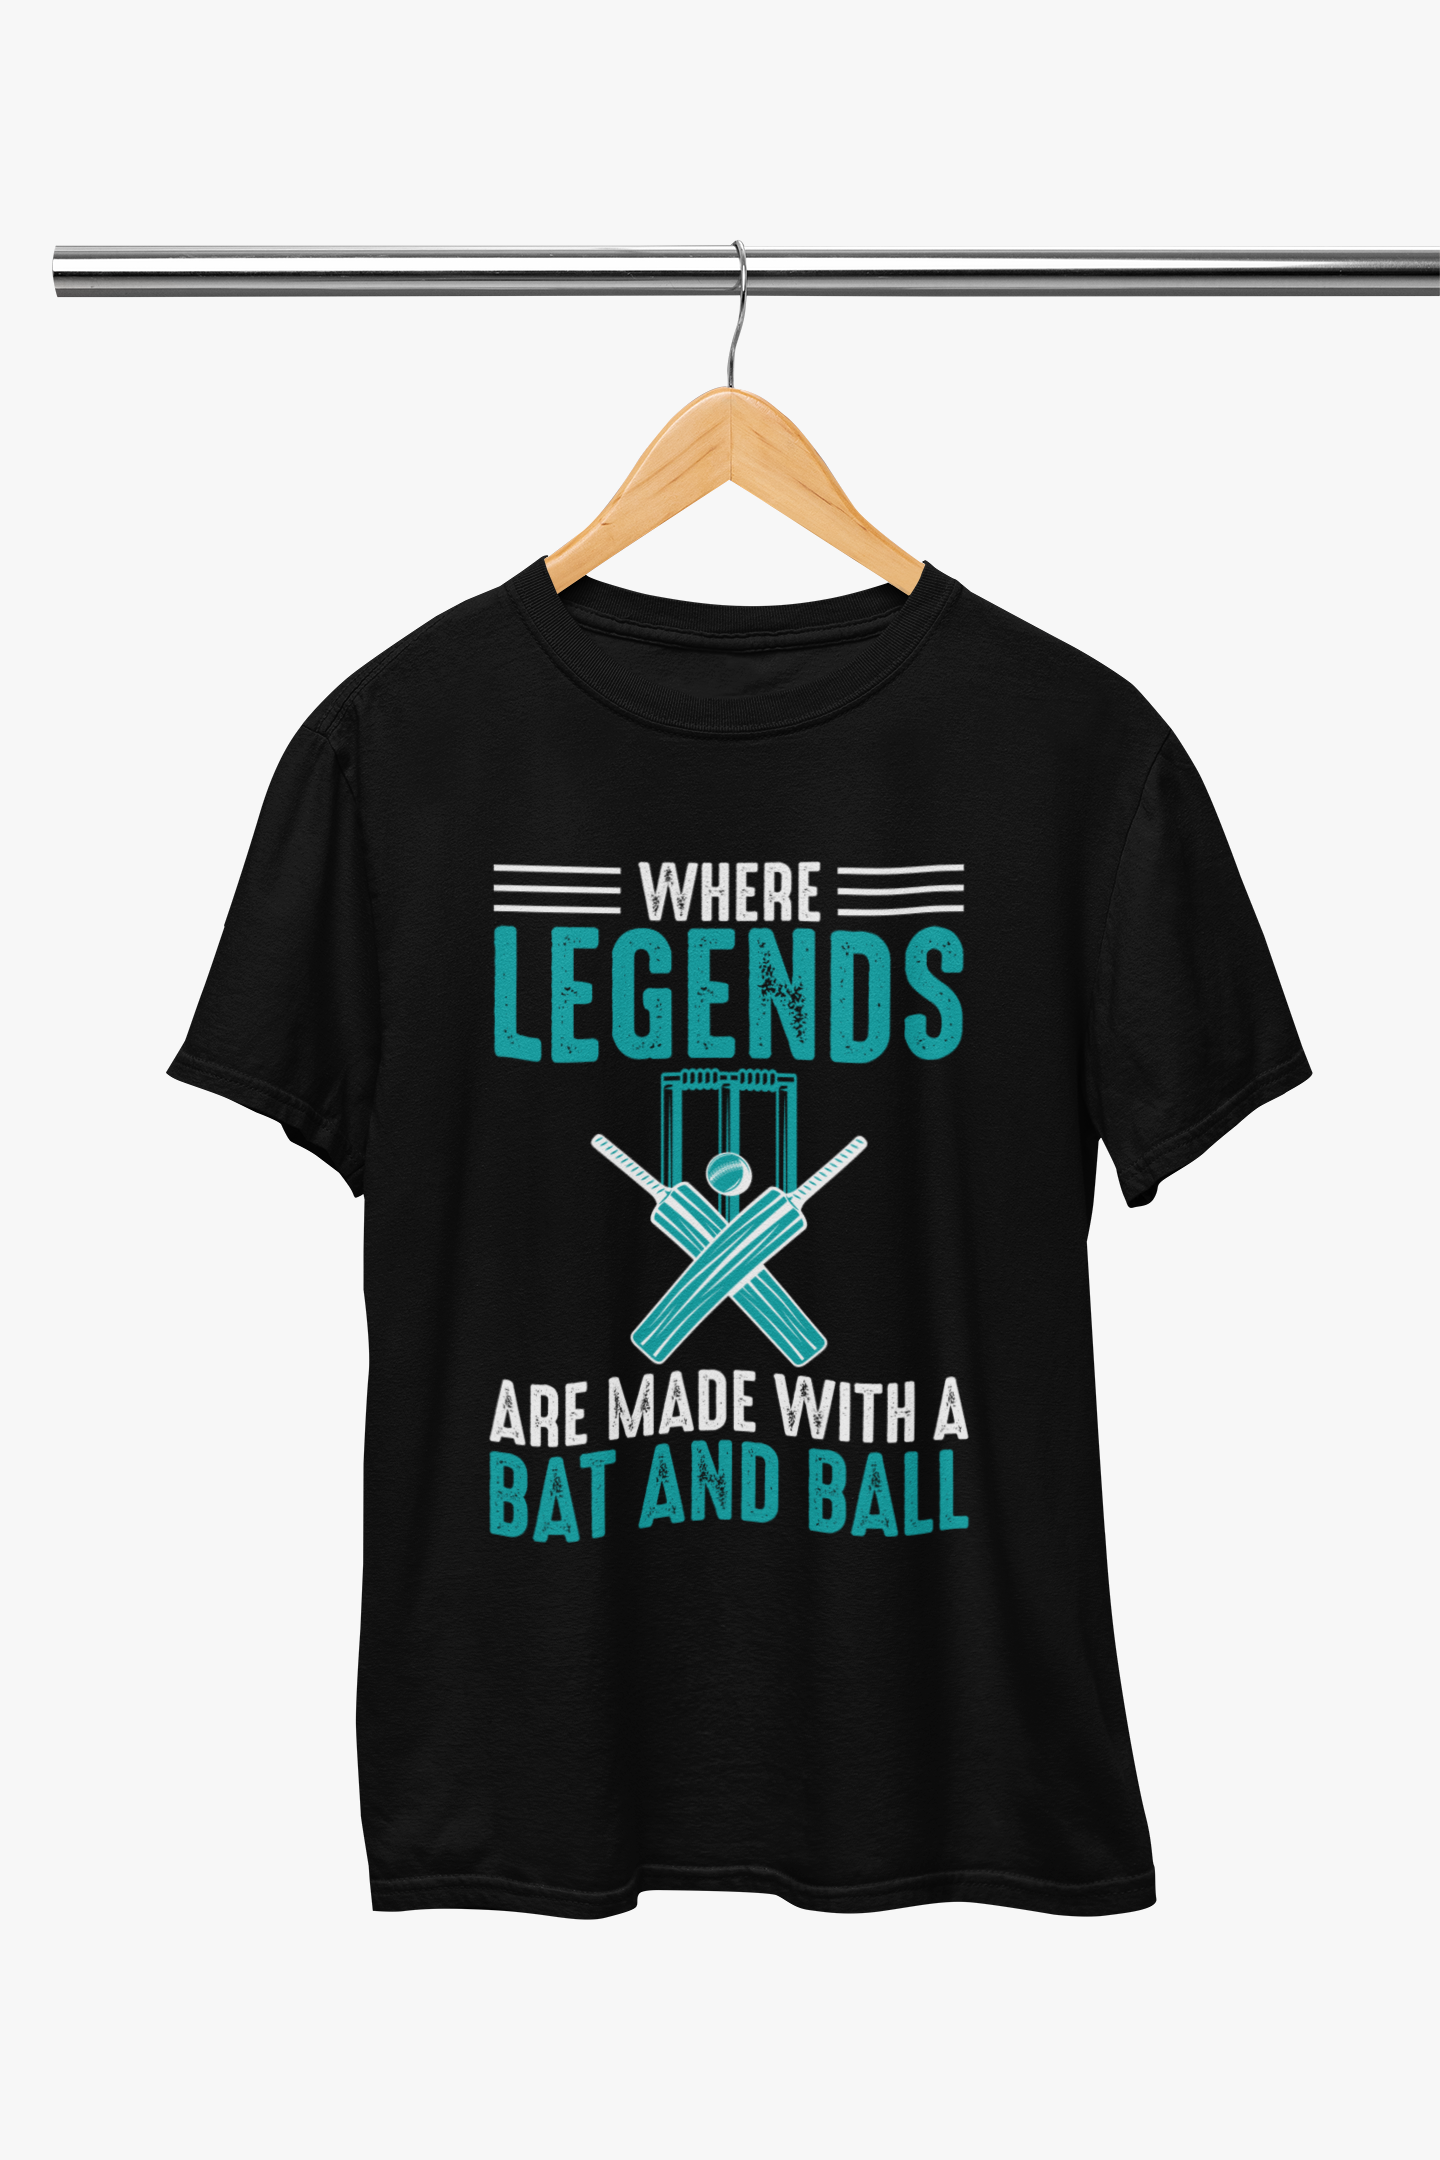 Cricket's Legendary Legacy T-Shirt